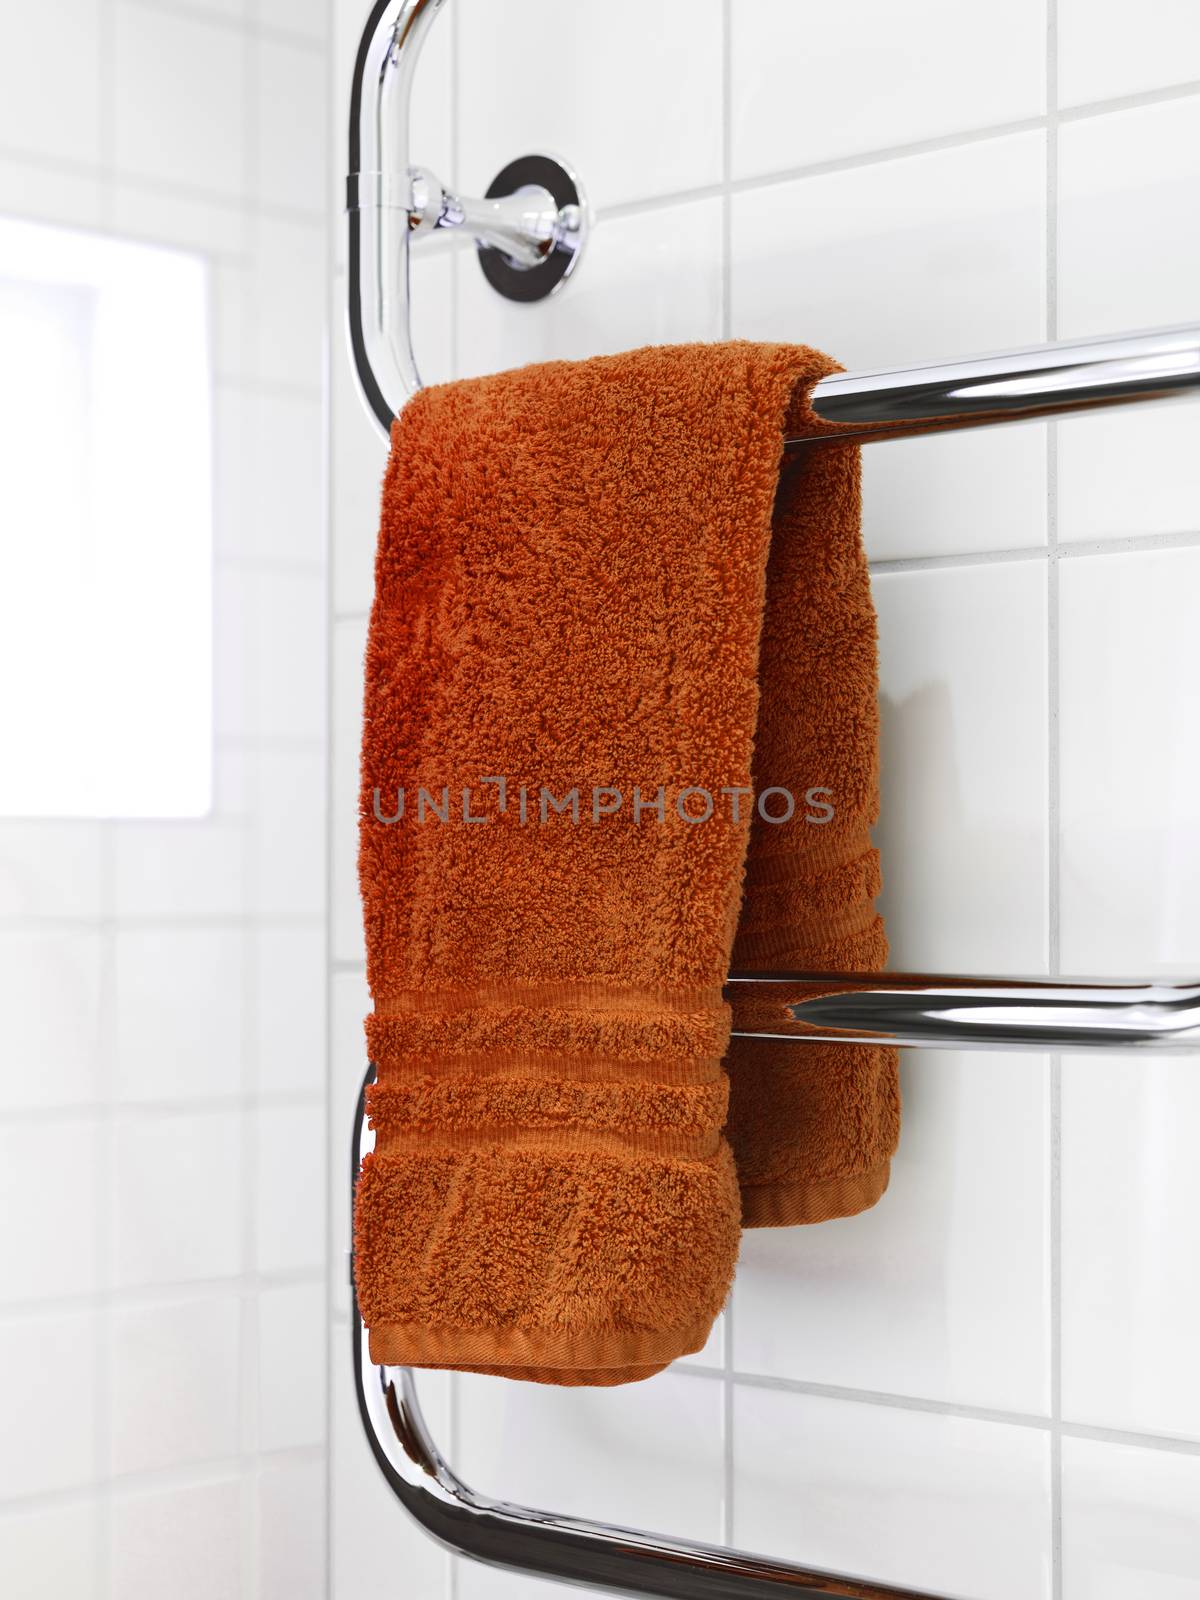 Orange towel on a dryer by gemenacom